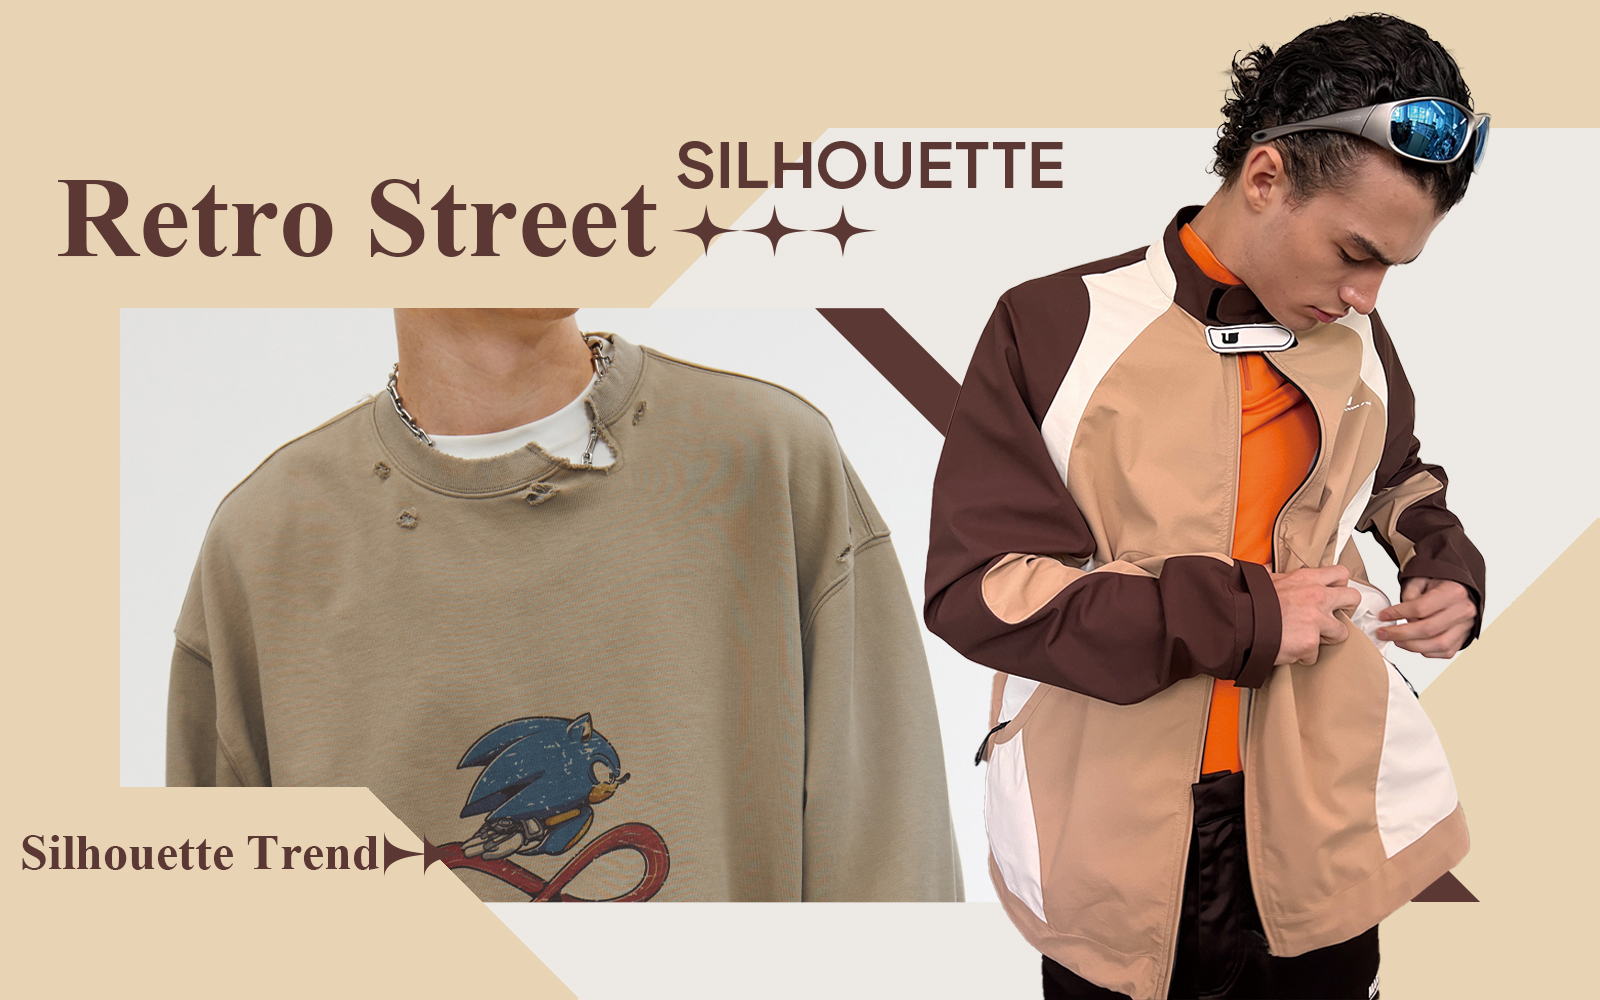 Retro Street -- The Silhouette Trend for Menswear